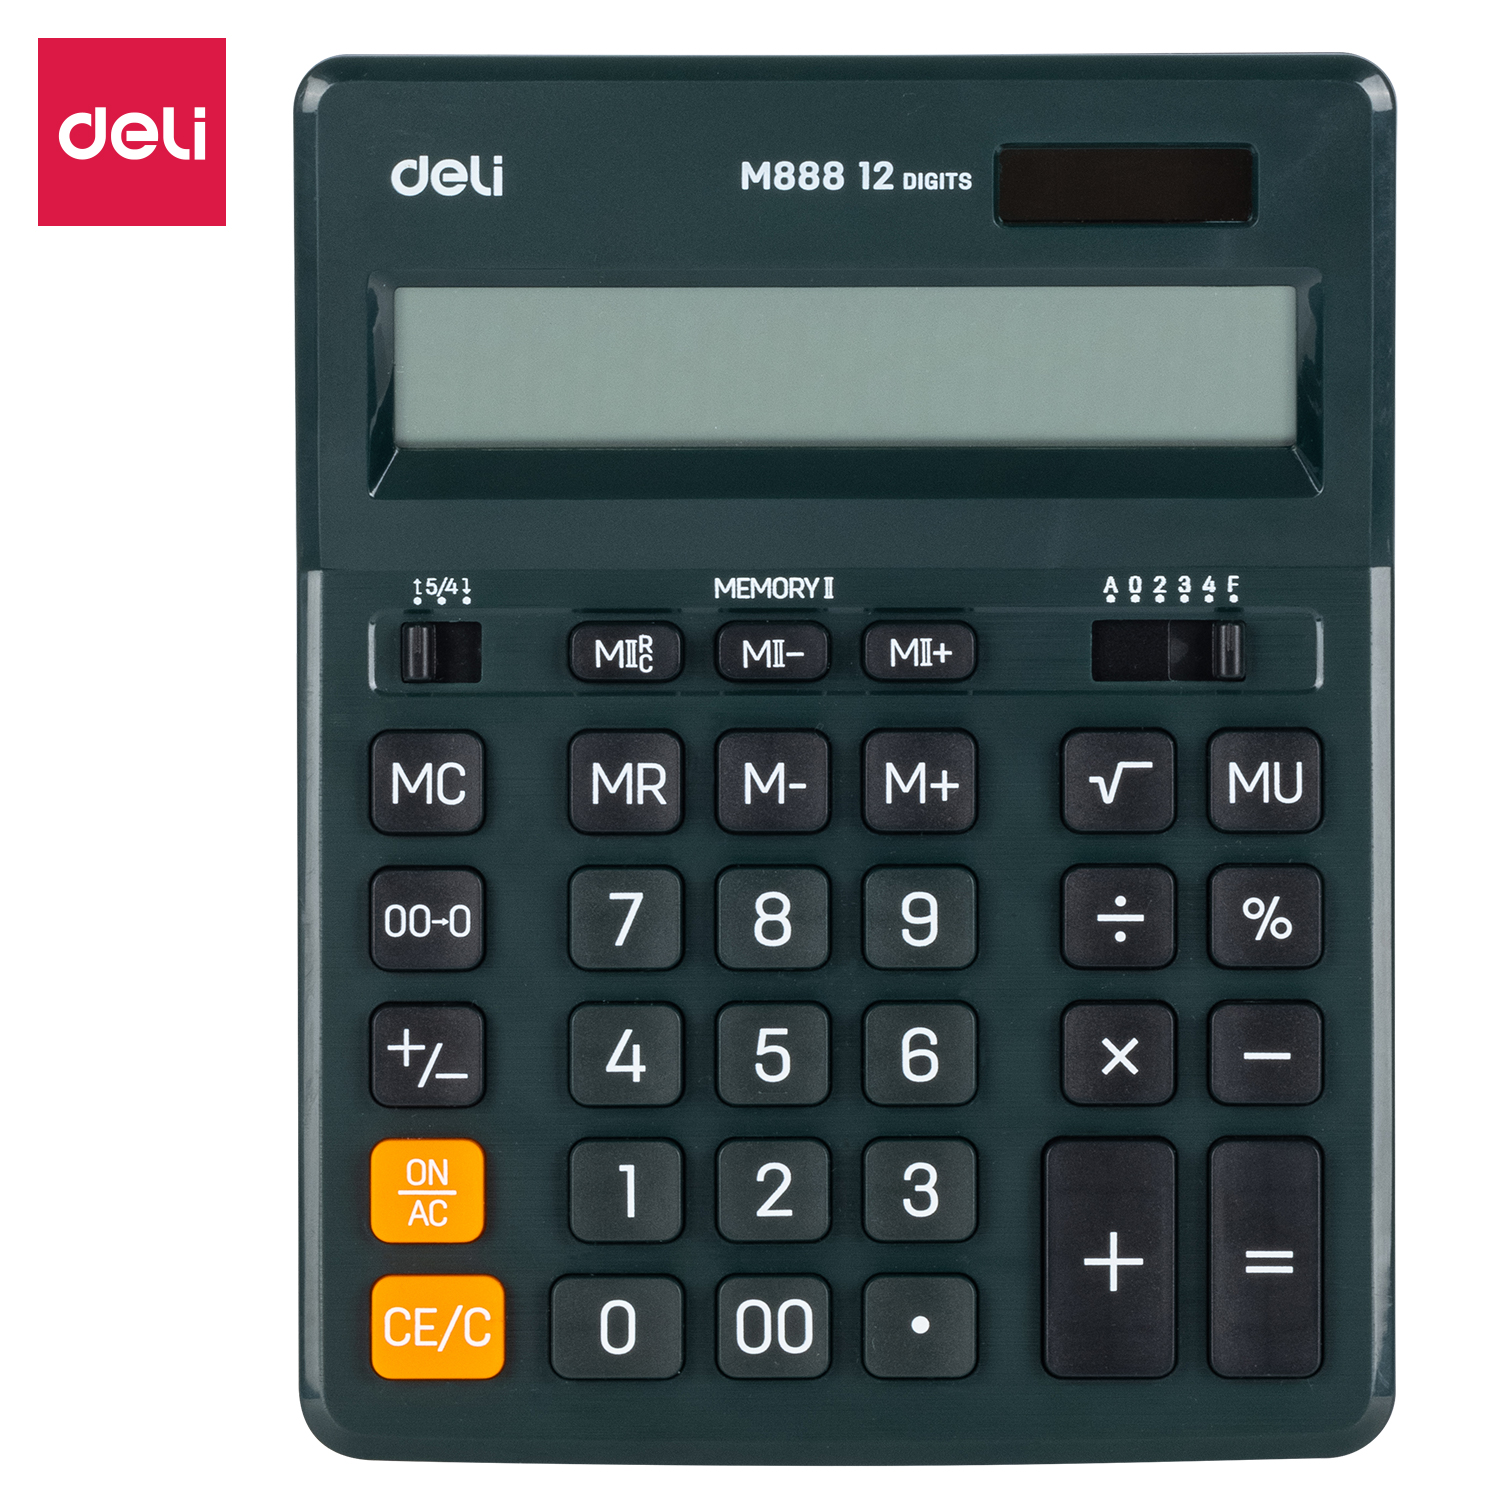 Deli-EM888FDual-memory calculator